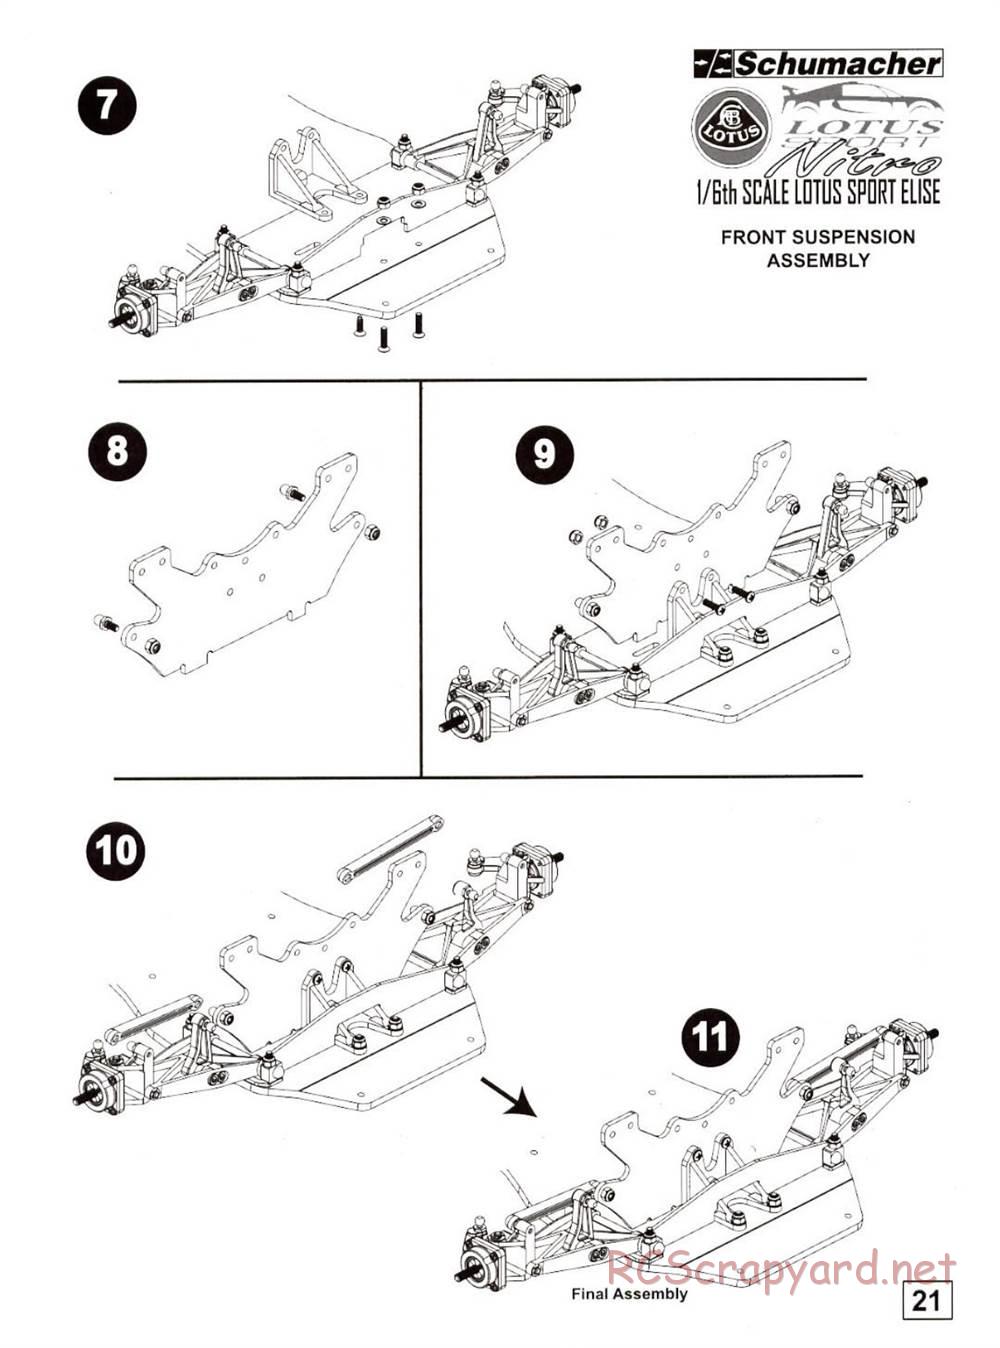 Schumacher - Big 6 Lotus Nitro - Manual - Page 16